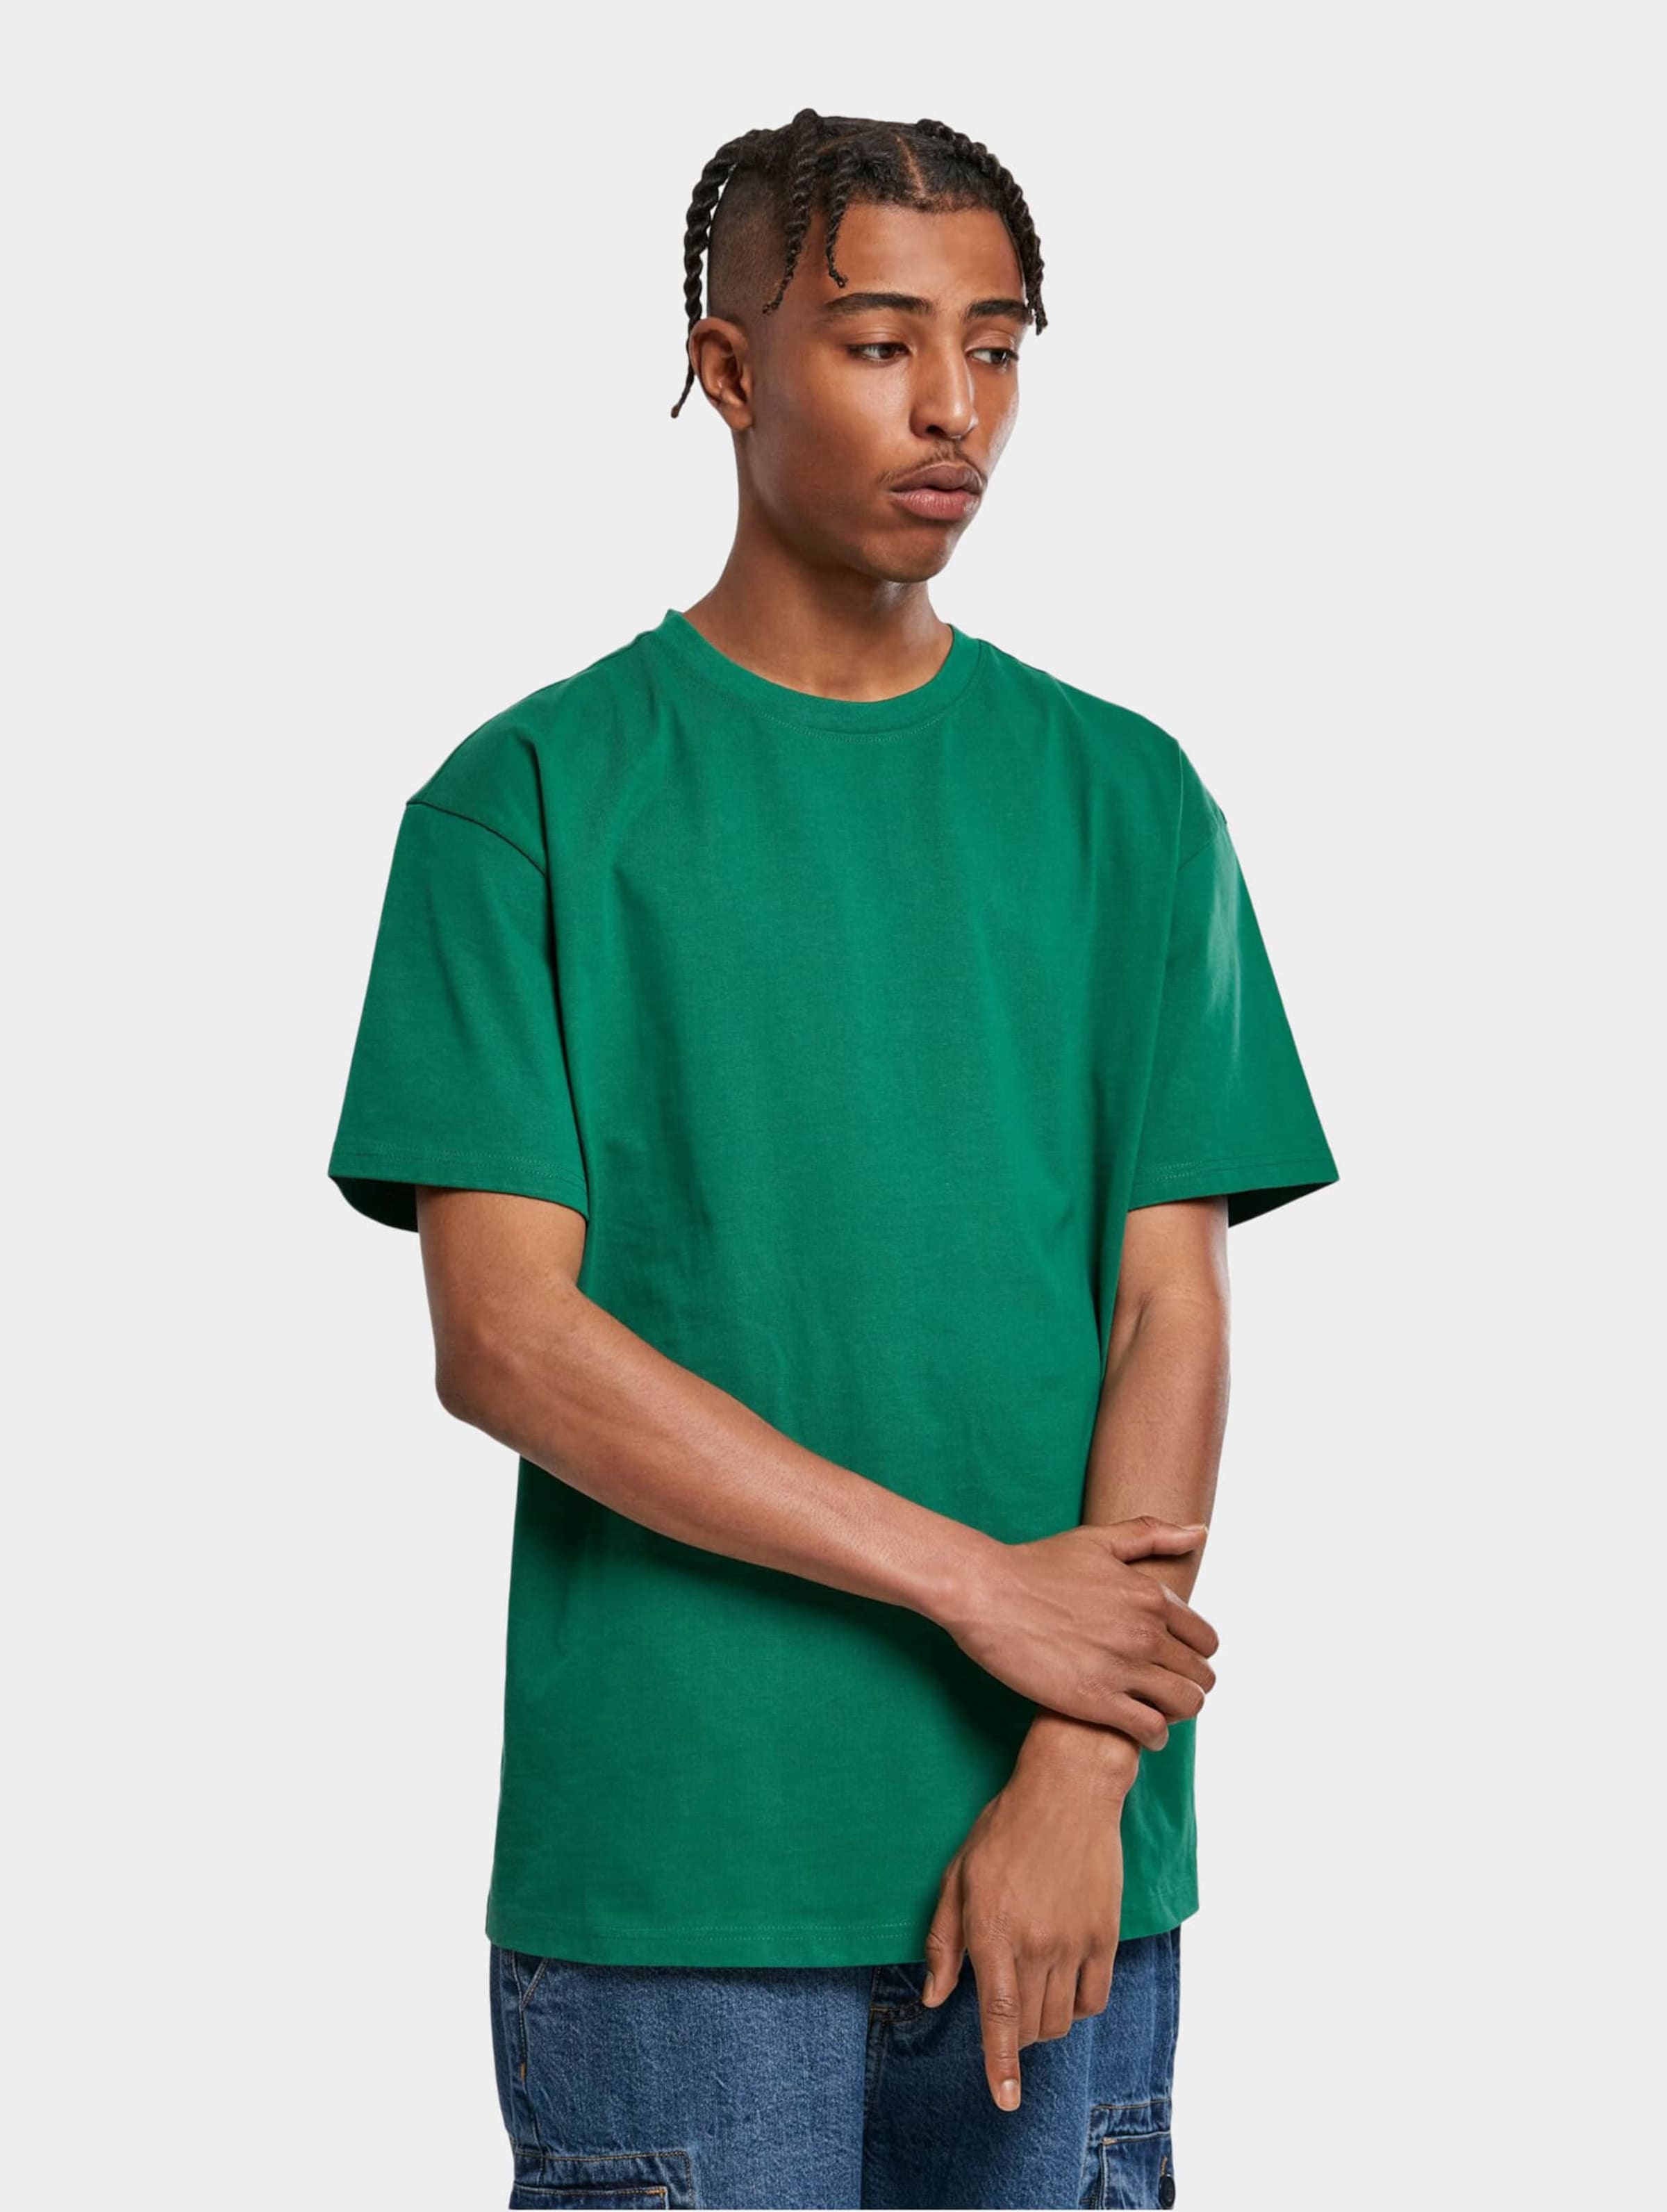 Urban Classics Heren Tshirt -4XL- Heavy Oversized Groen